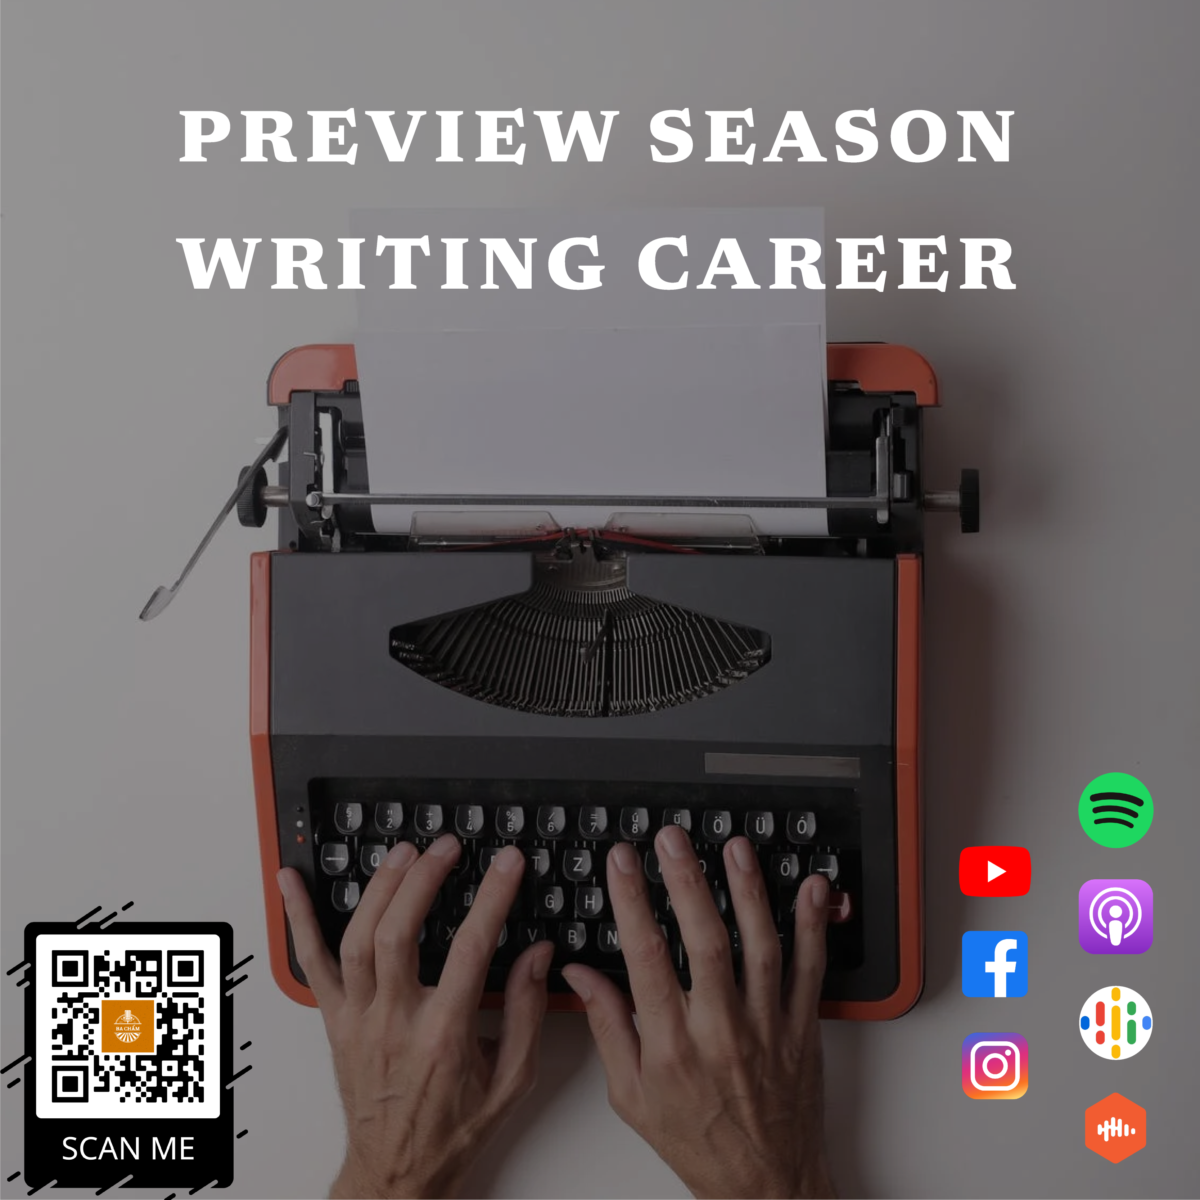 Ba Chấm Preview The Writing Career Season